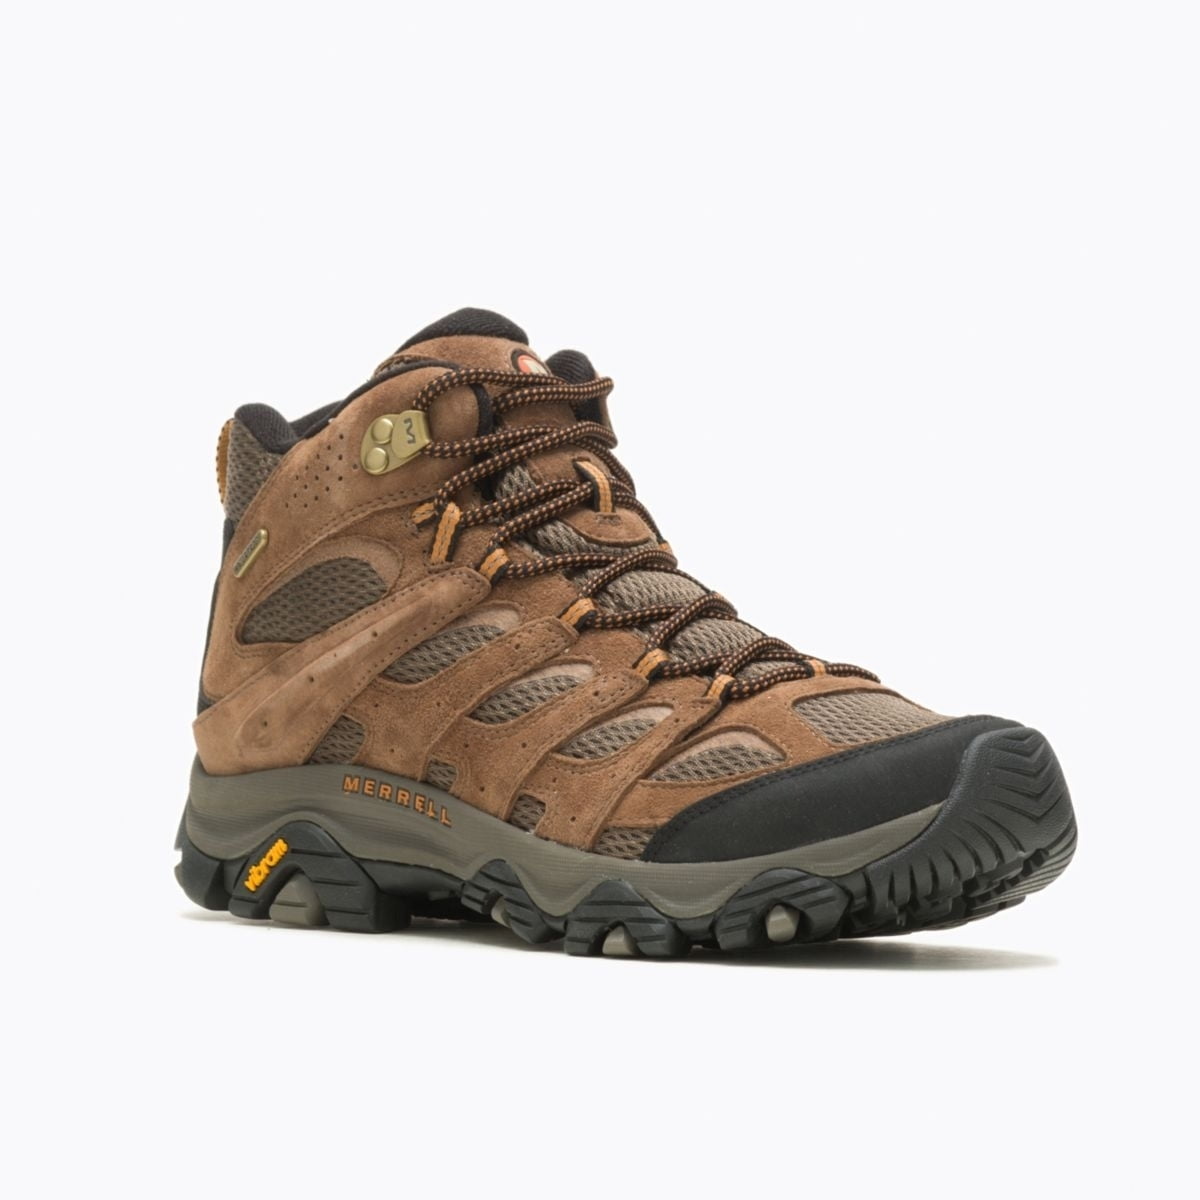 Merrell Men's Moab Mid Hiking Boot - J035839 - Walmart.com